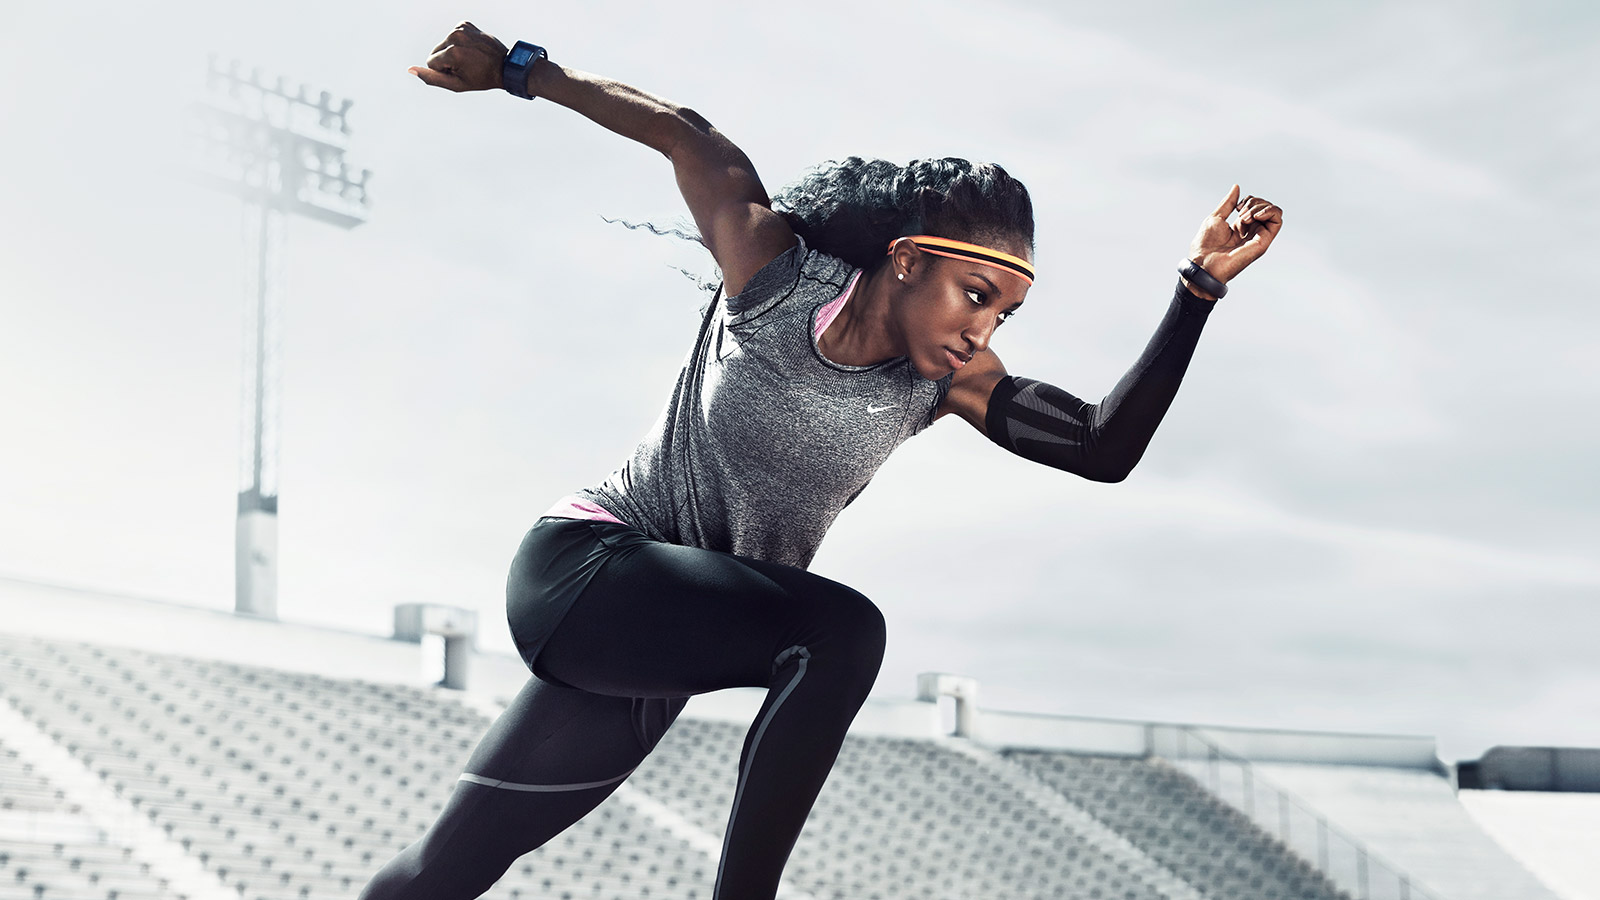 Download Nike Fitness Wallpaper Gallery